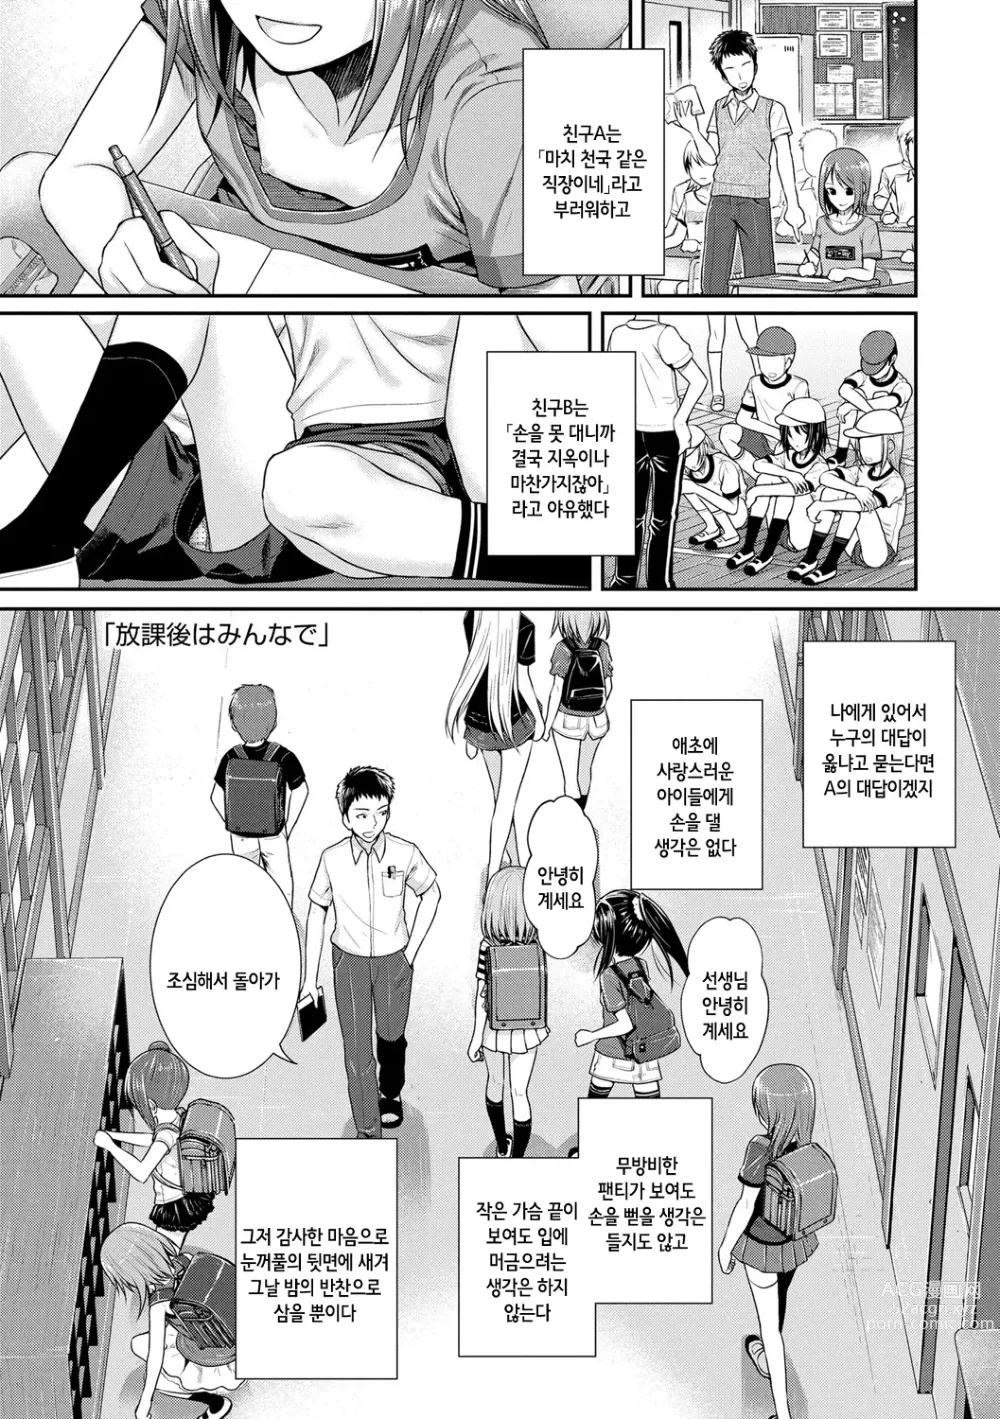 Page 7 of manga 프로토타입 로리타 + 토라노아나 구입 특전 4P 리플렛 휴일은 아저씨와 (decensored)